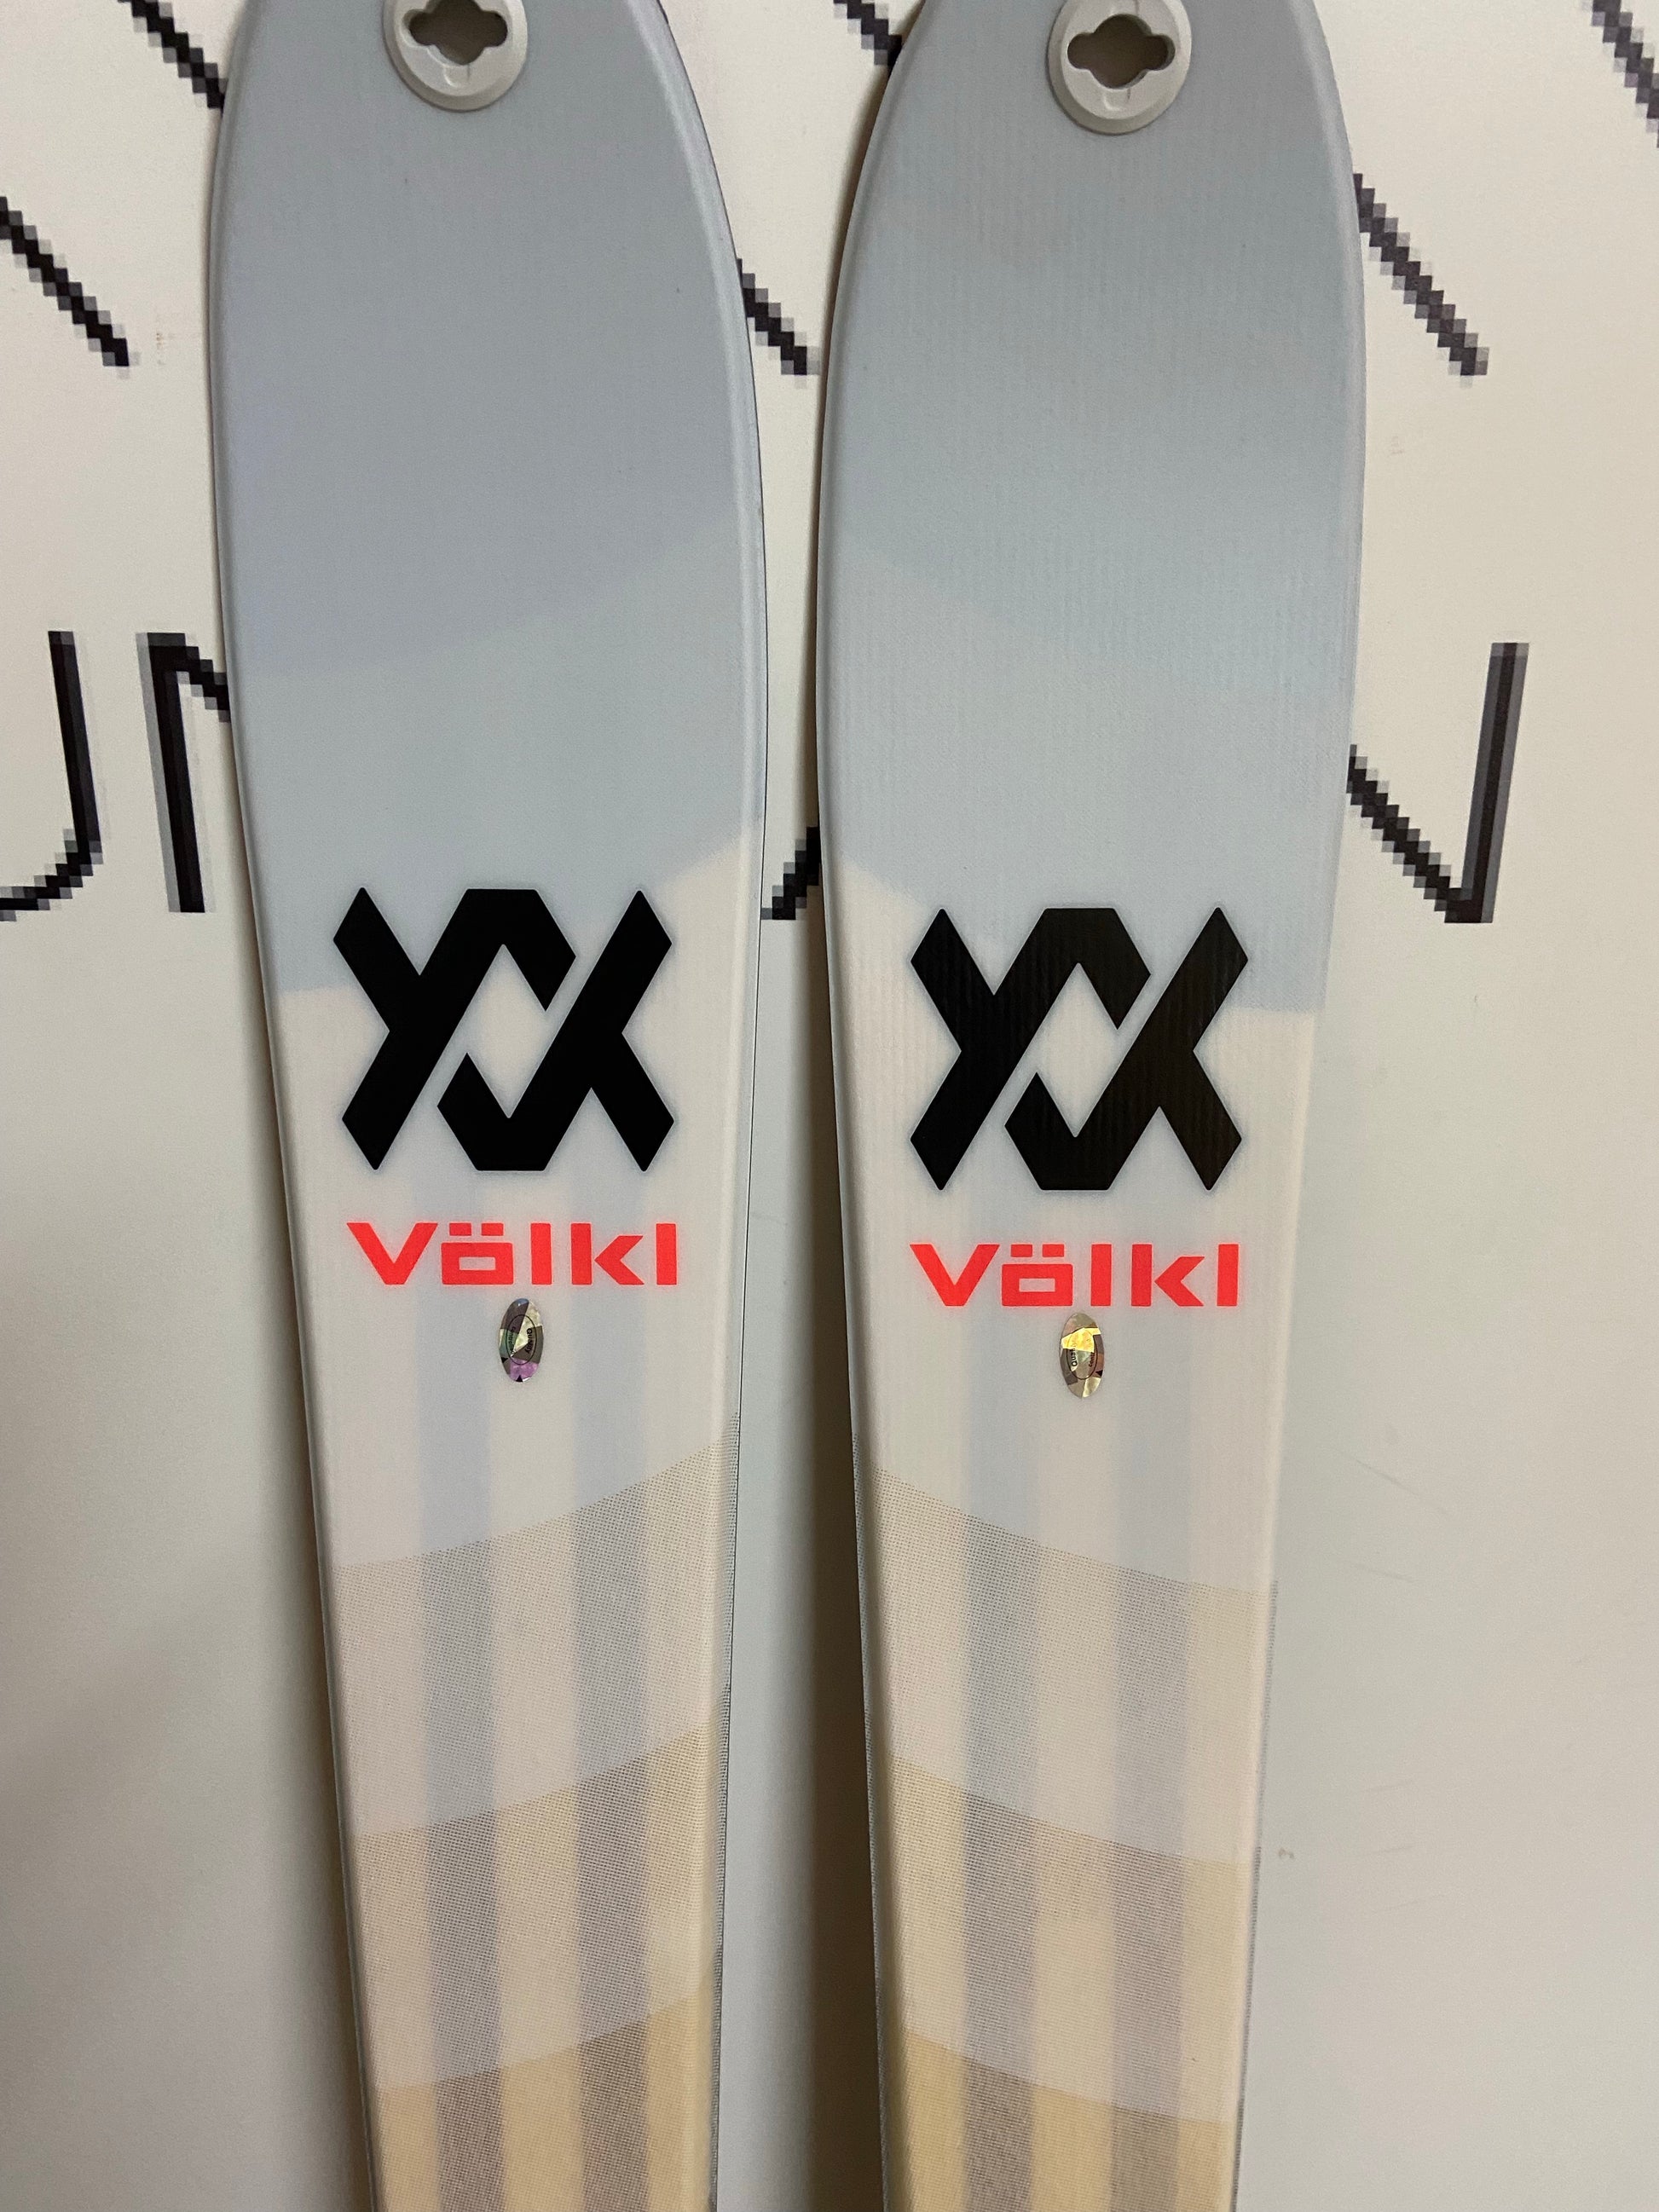 VERHUUR - Volkl Rise 80 (156cm) + Marker Alpinist 8 + Contour Hybrid vellen